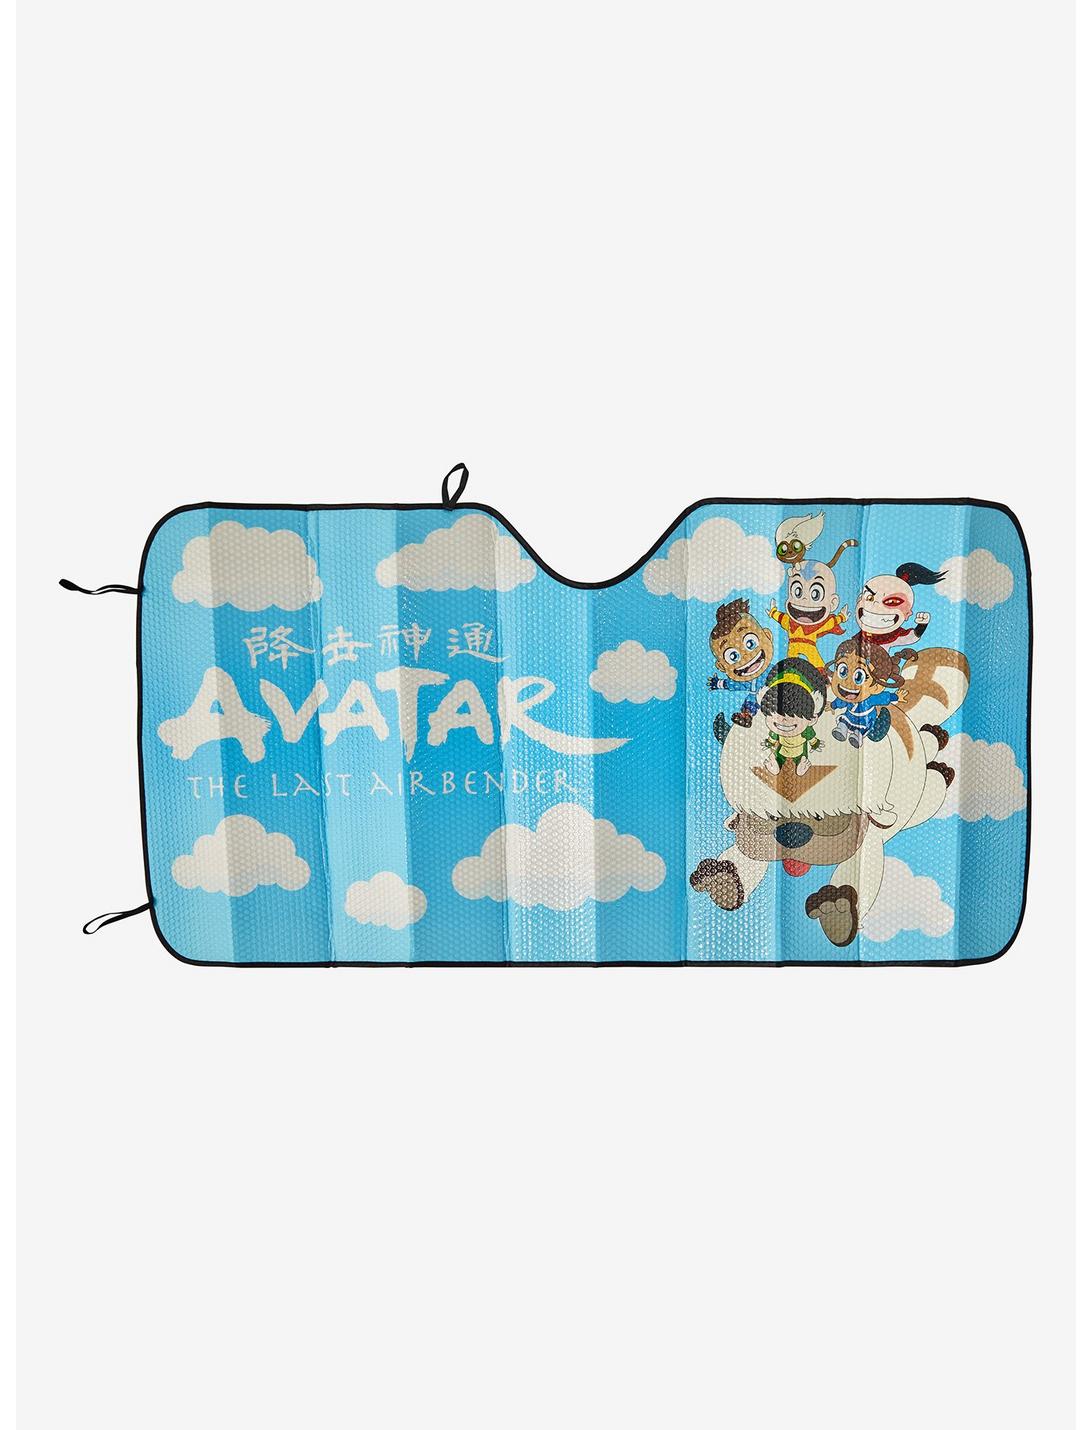 Avatar: The Last Airbender Chibi Gaang Clouds Sunshade - BoxLunch Exclusive, , hi-res